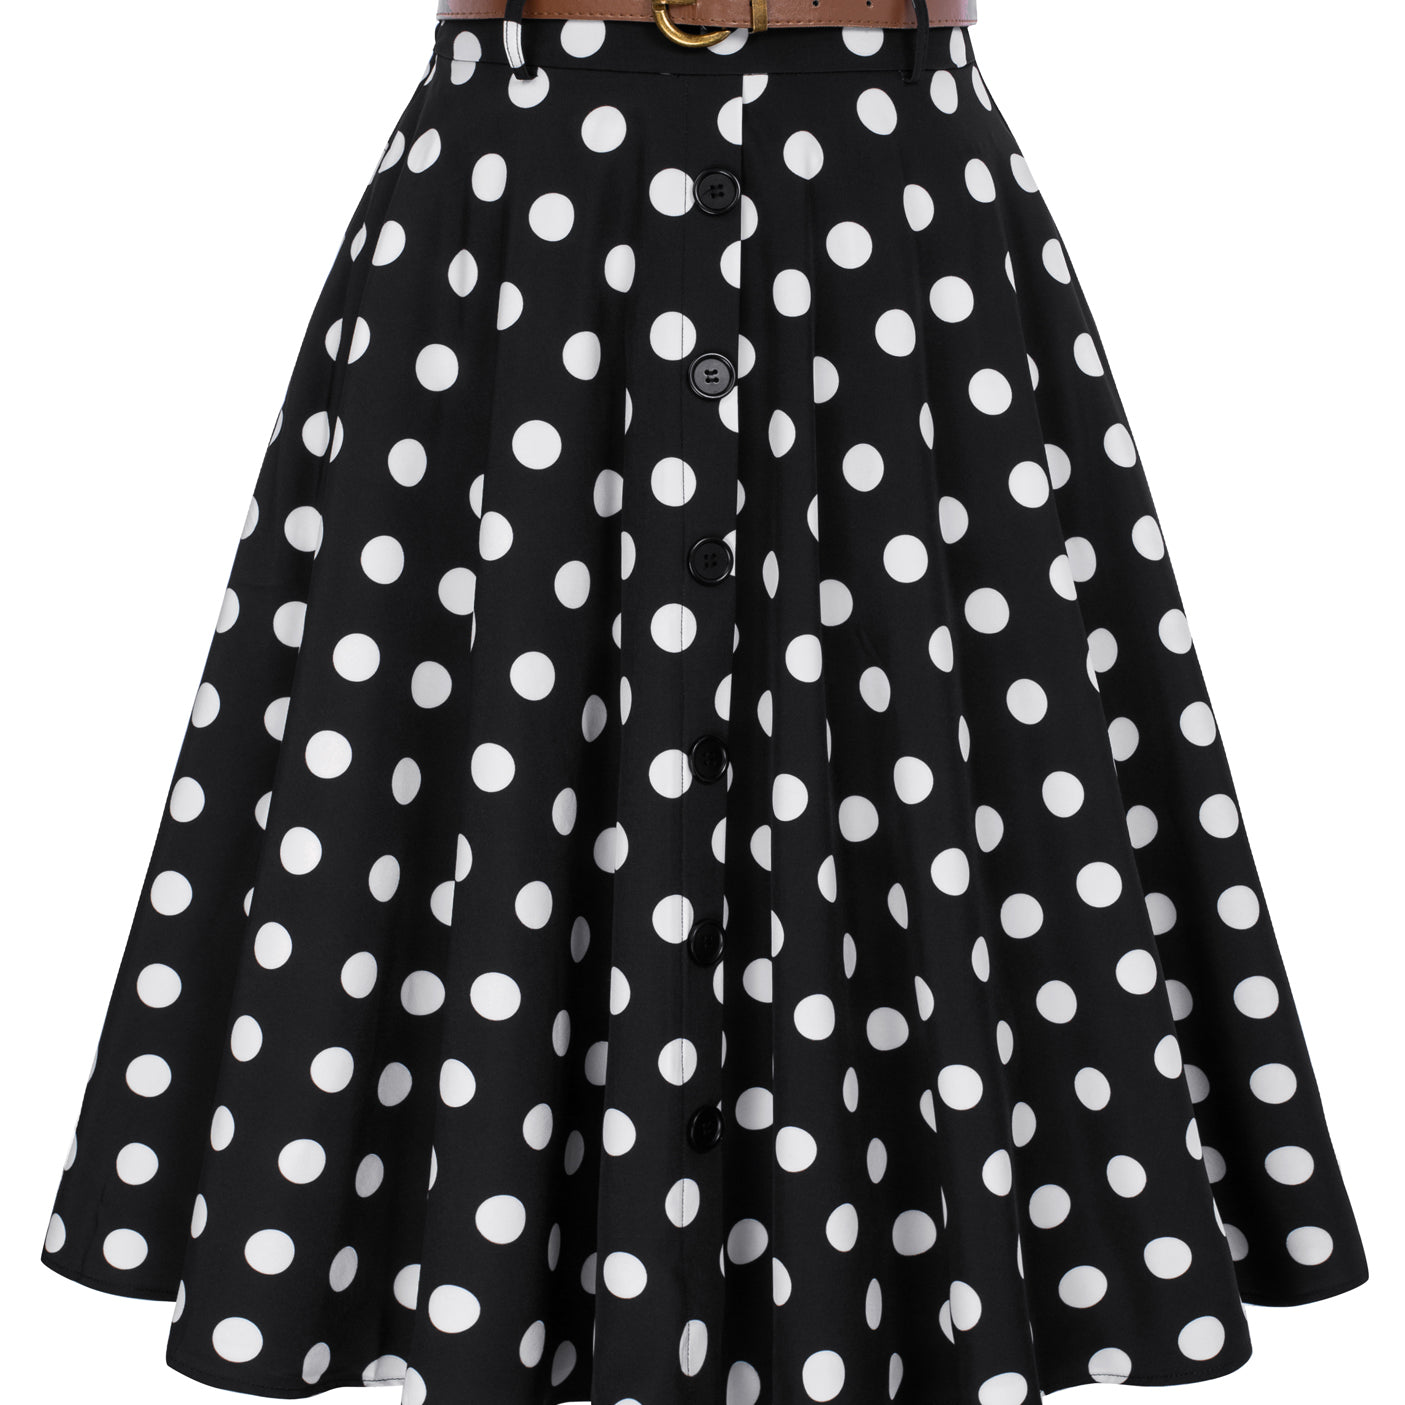 Polka Dots Swing Skirt with Belt Elastic High Waist Buttons Decorated Skirt